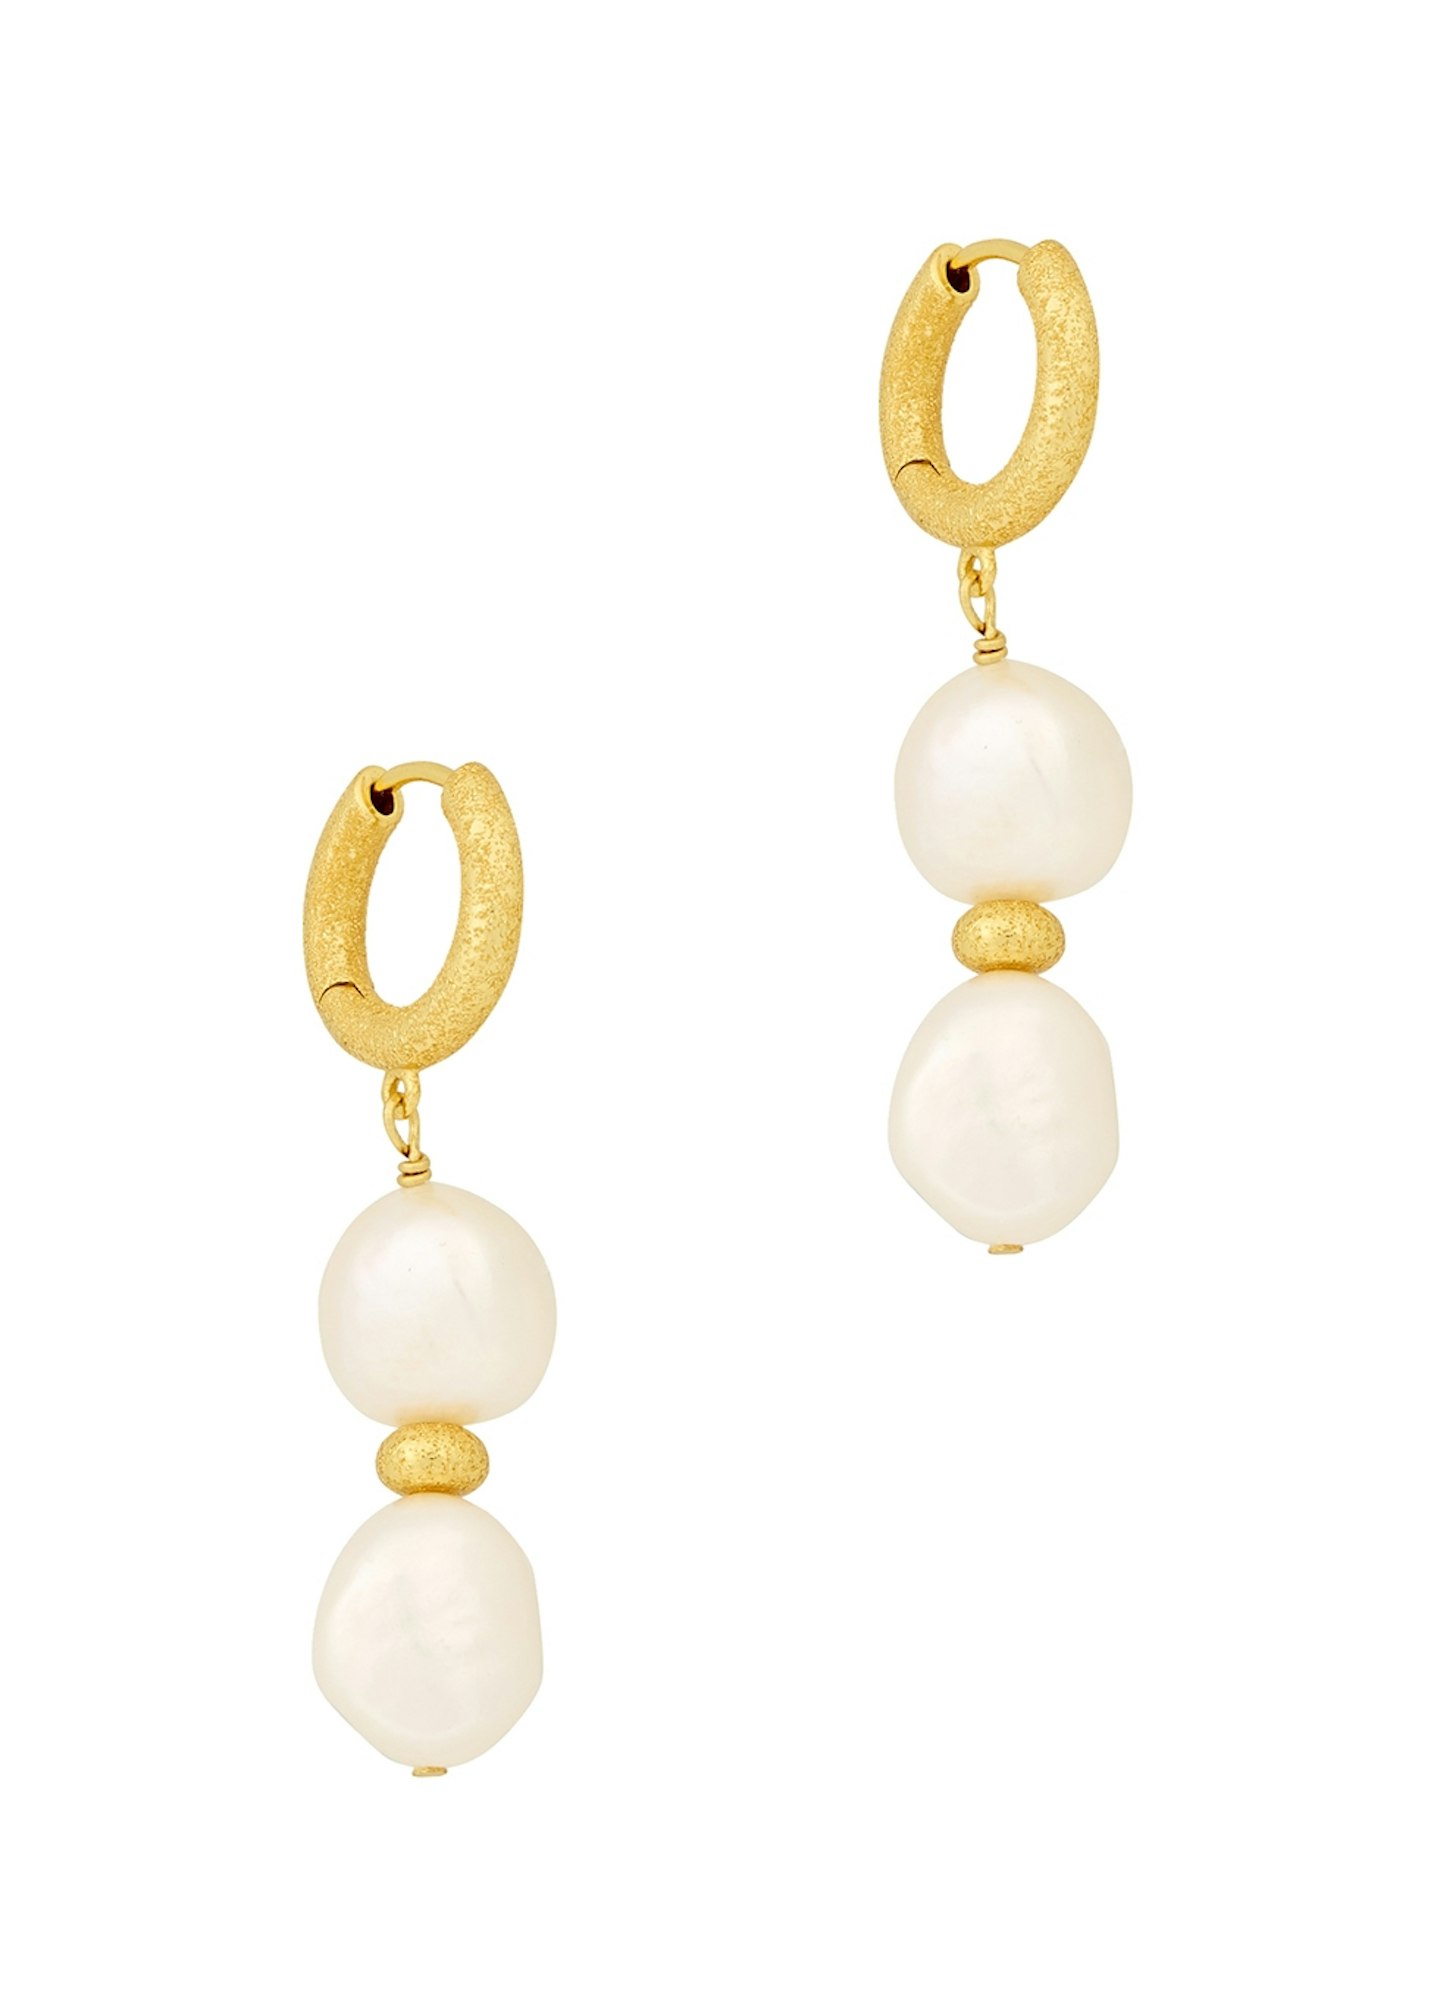 Anni Lu, Stellar Pearly Gold-Pleated Hoop Earrings, £135